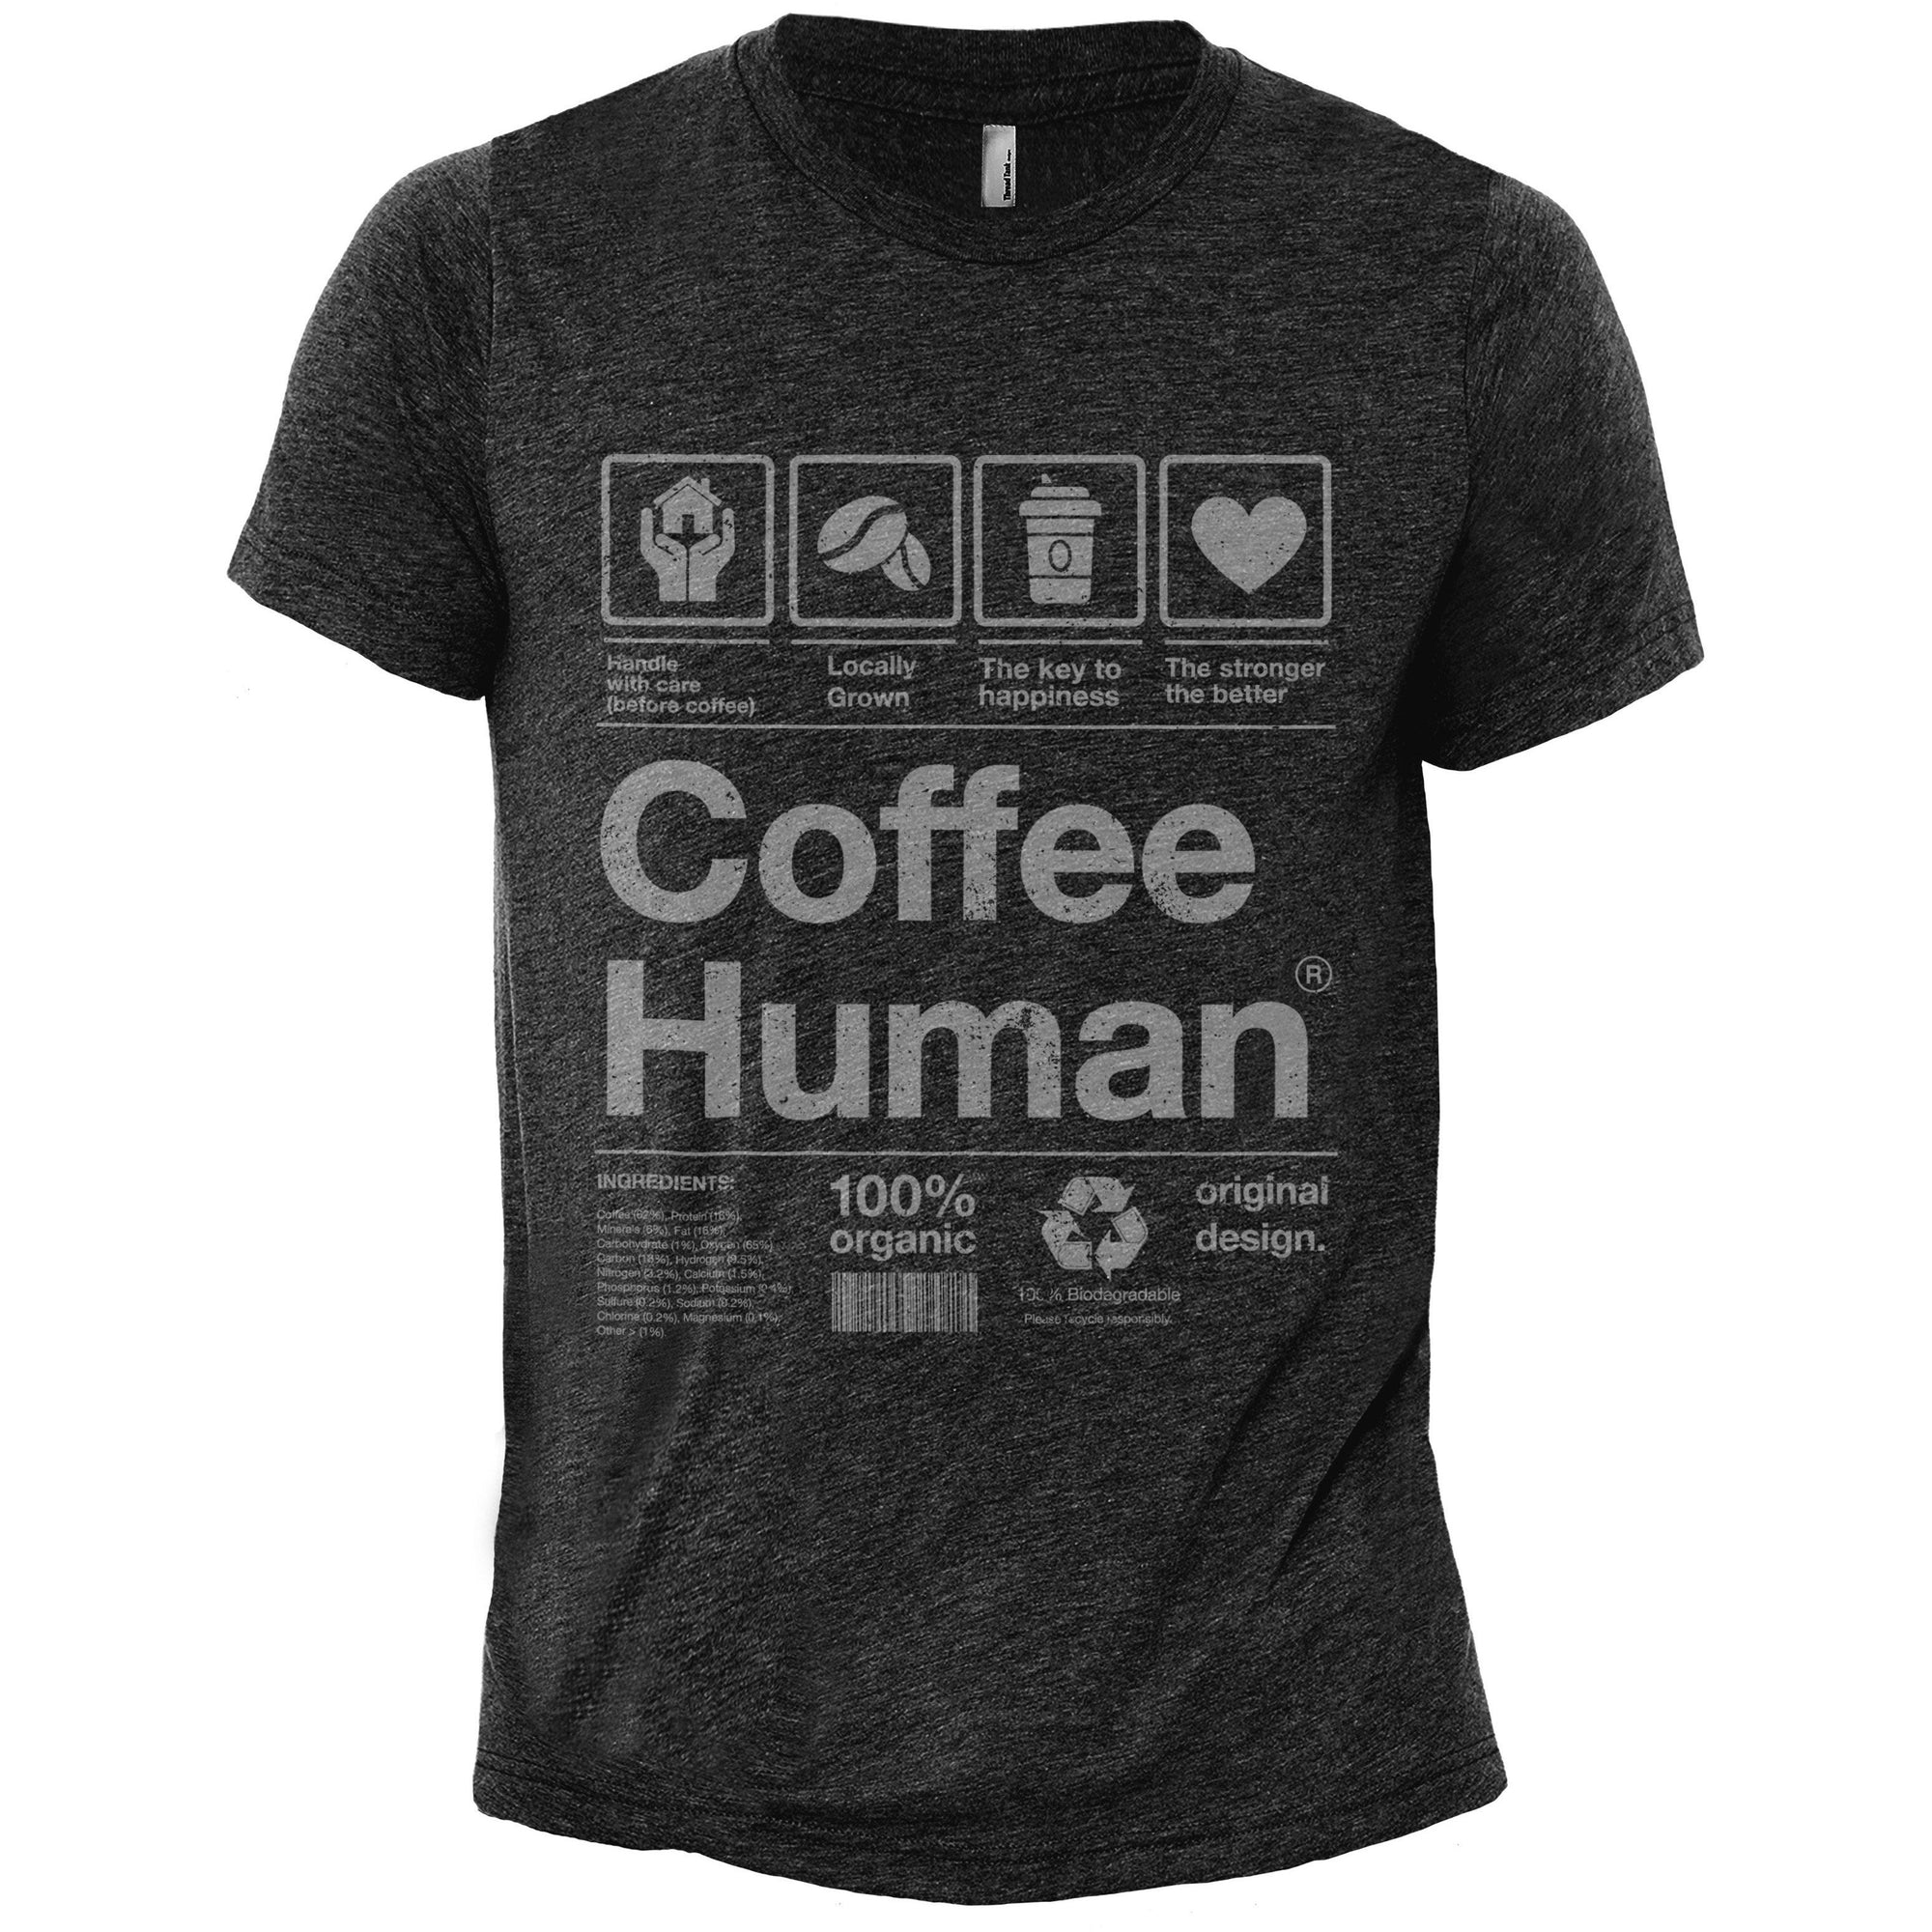 Coffee Human Heather Grey Printed Graphic Men's Crew T-Shirt Tee